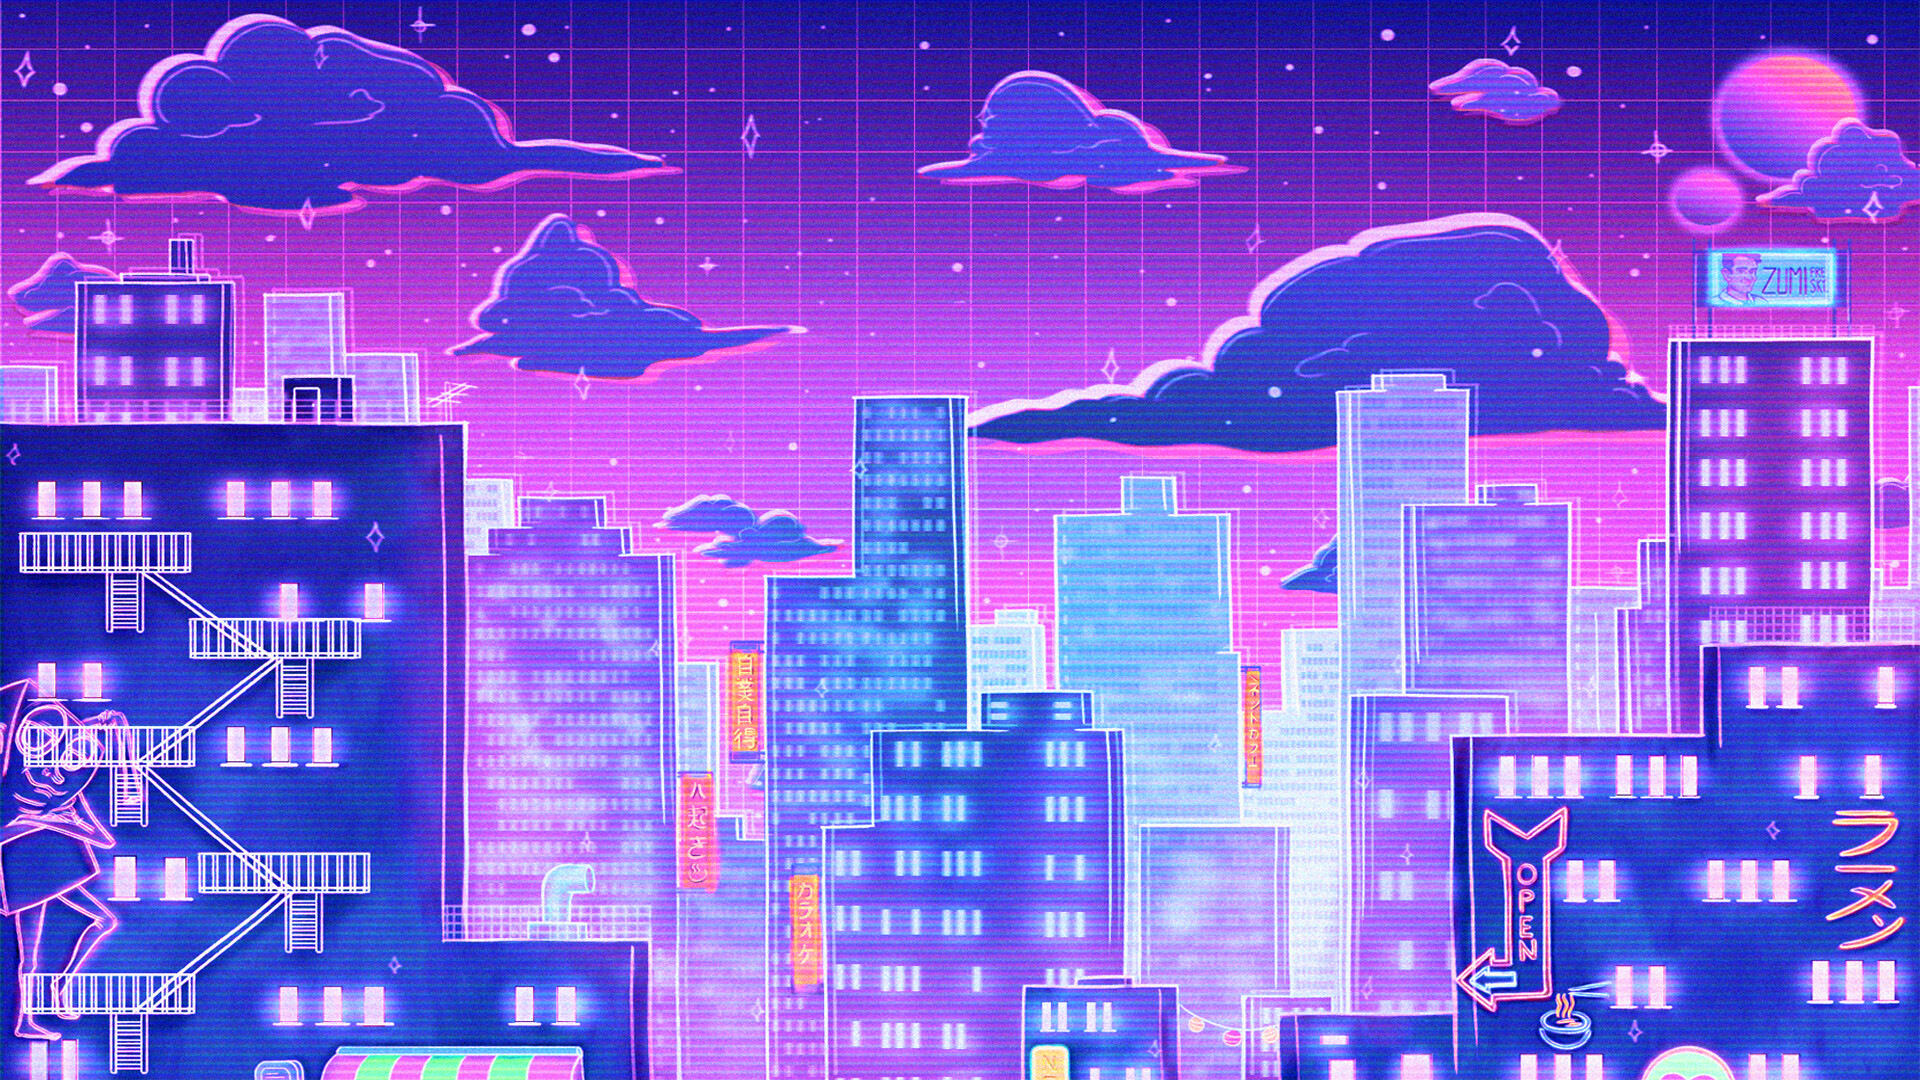 Cyberpunk Neon City Night Futuristic City Scene in a Style of Pixel Art  80 S Wallpaper Retro Future Stock Illustration  Illustration of  background blue 267715191